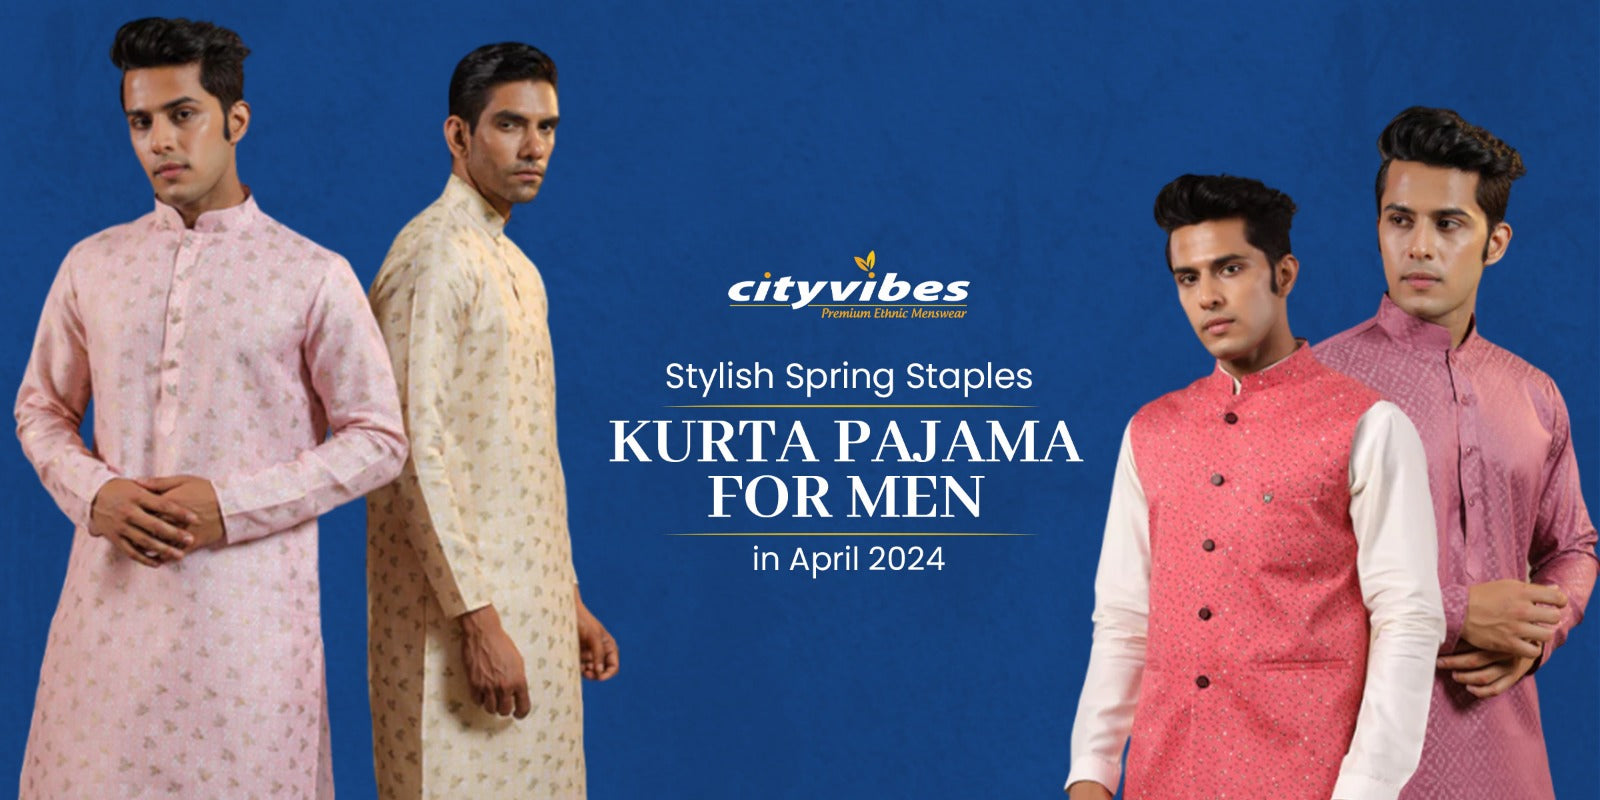 Stylish Spring Staples: Embracing Kurta Pajama for Men in April 2024